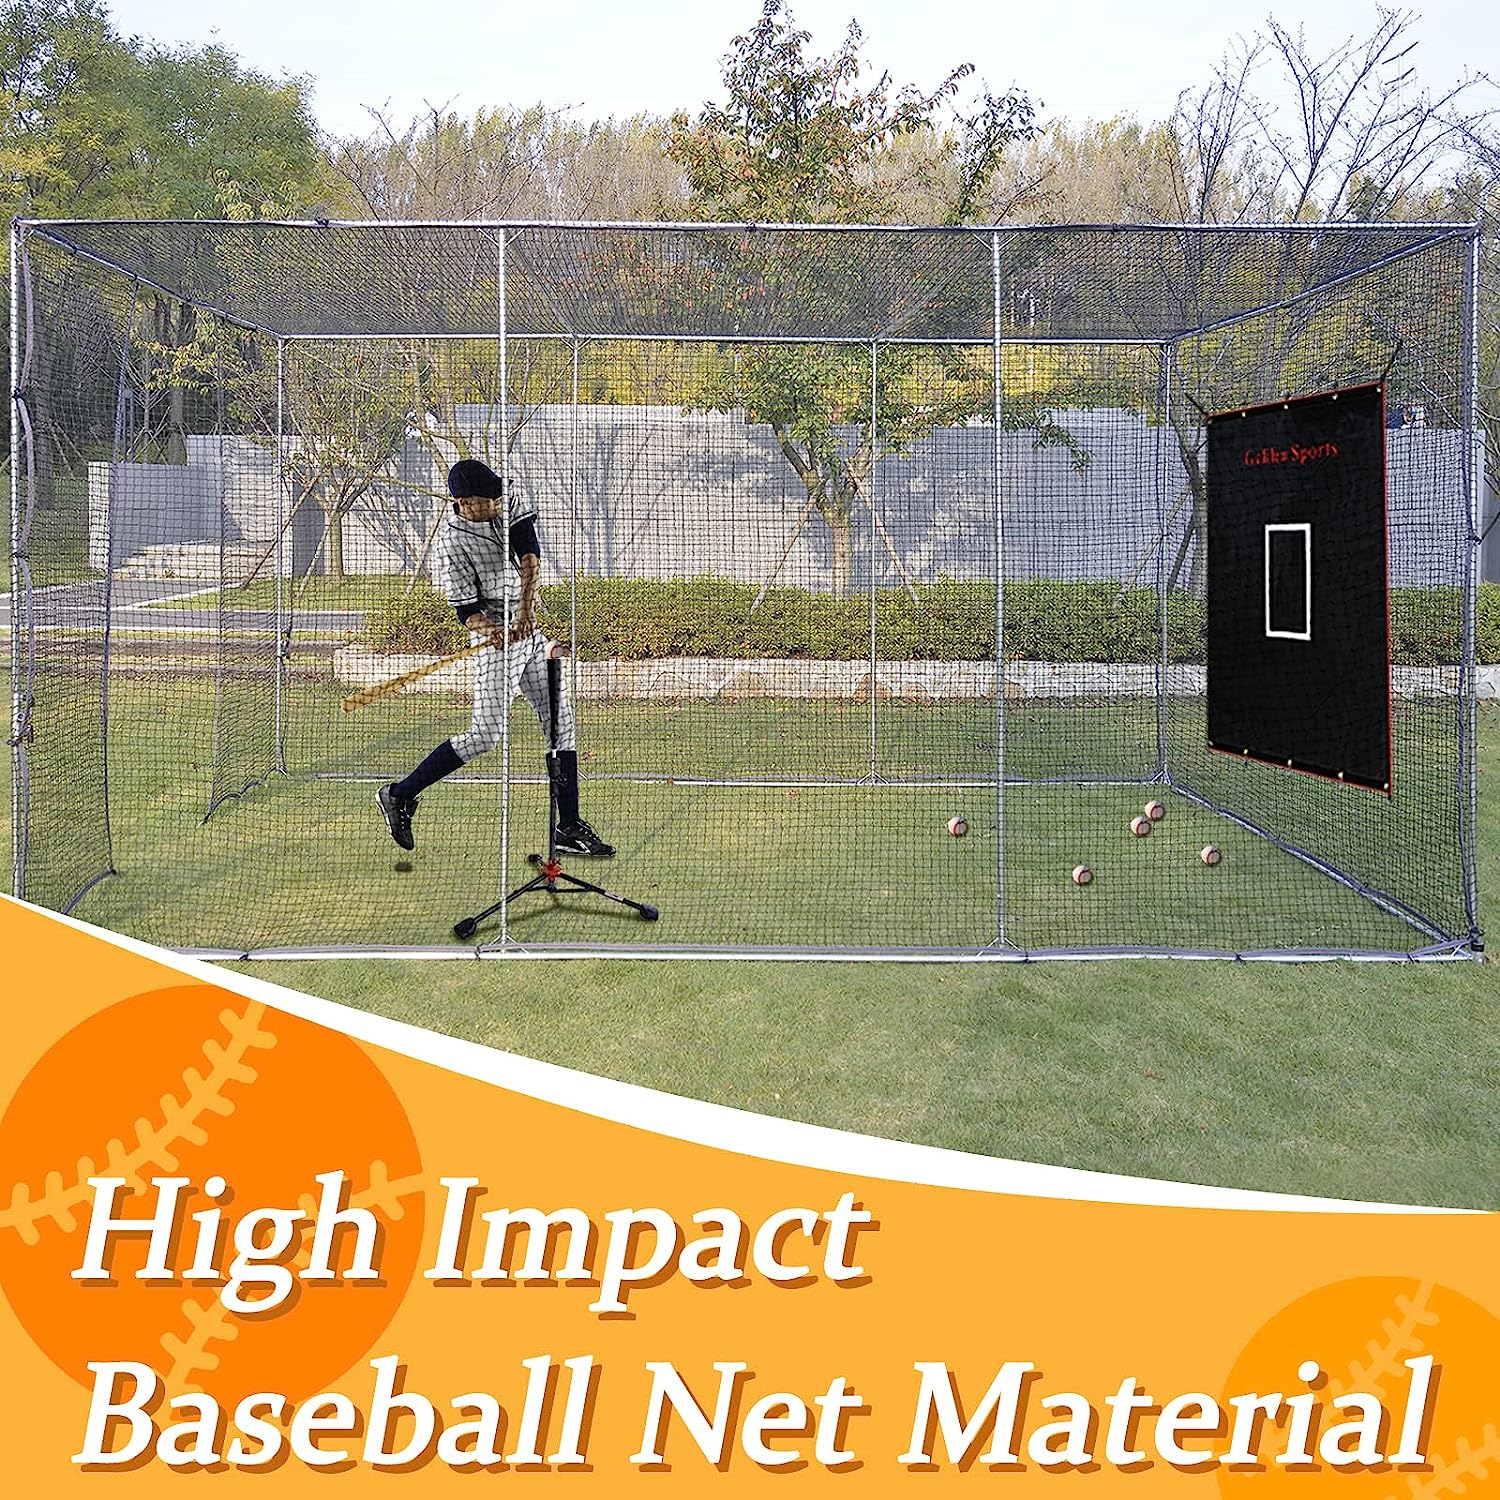 16X10X8 Gagalileo Baseball Batting Cage/ Backyard/Heavy Pitching Cage